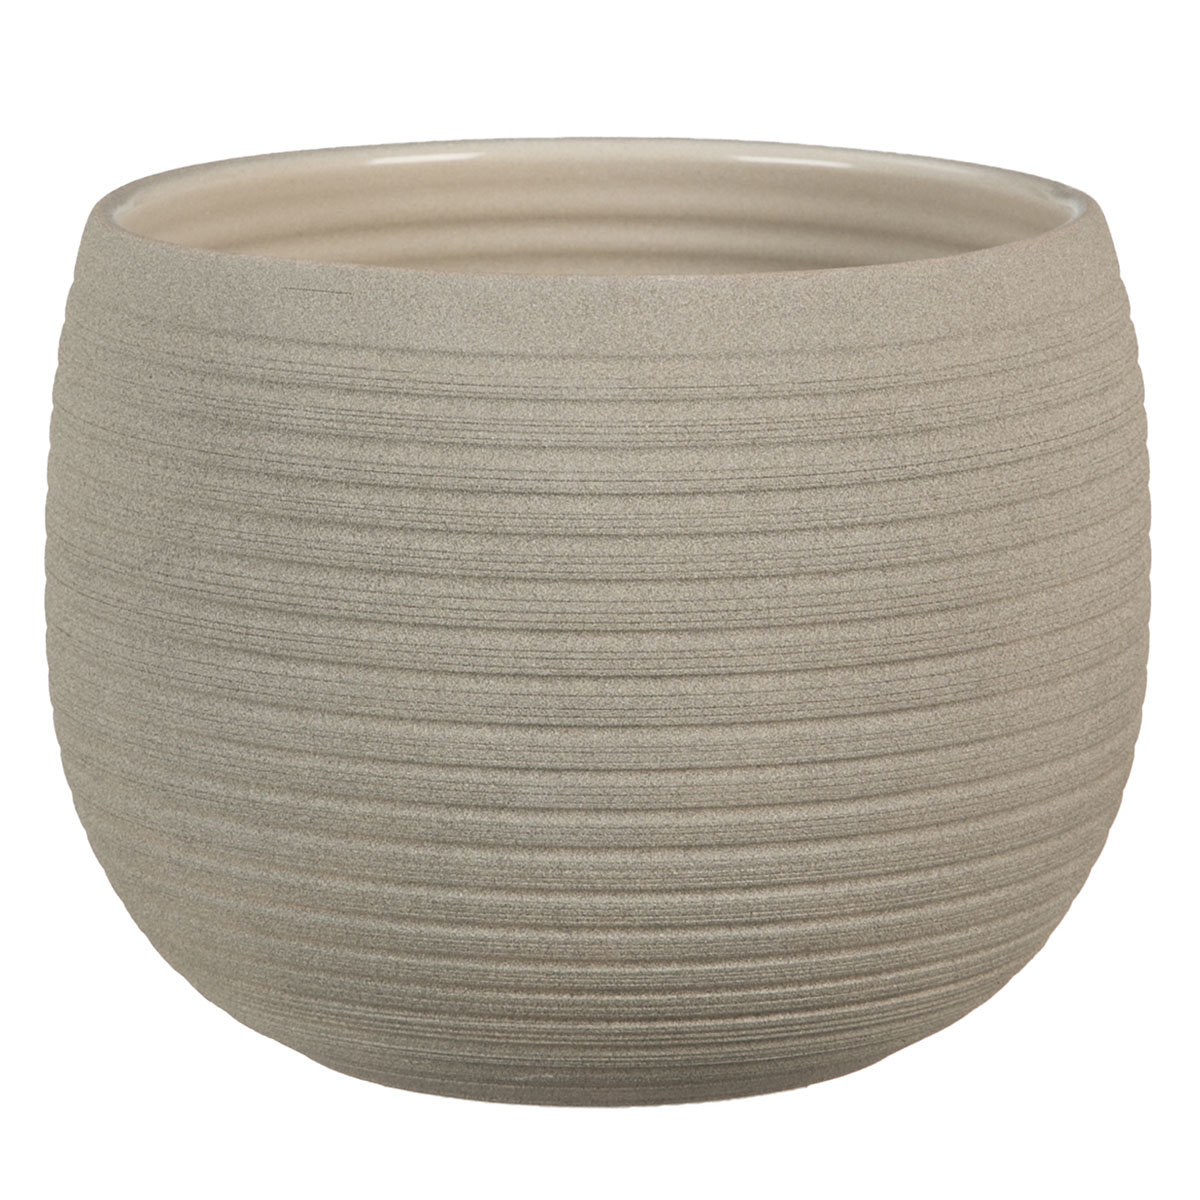 Keramik-Übertopf, rund, 15,5x21x21 cm, Taupe Stone
